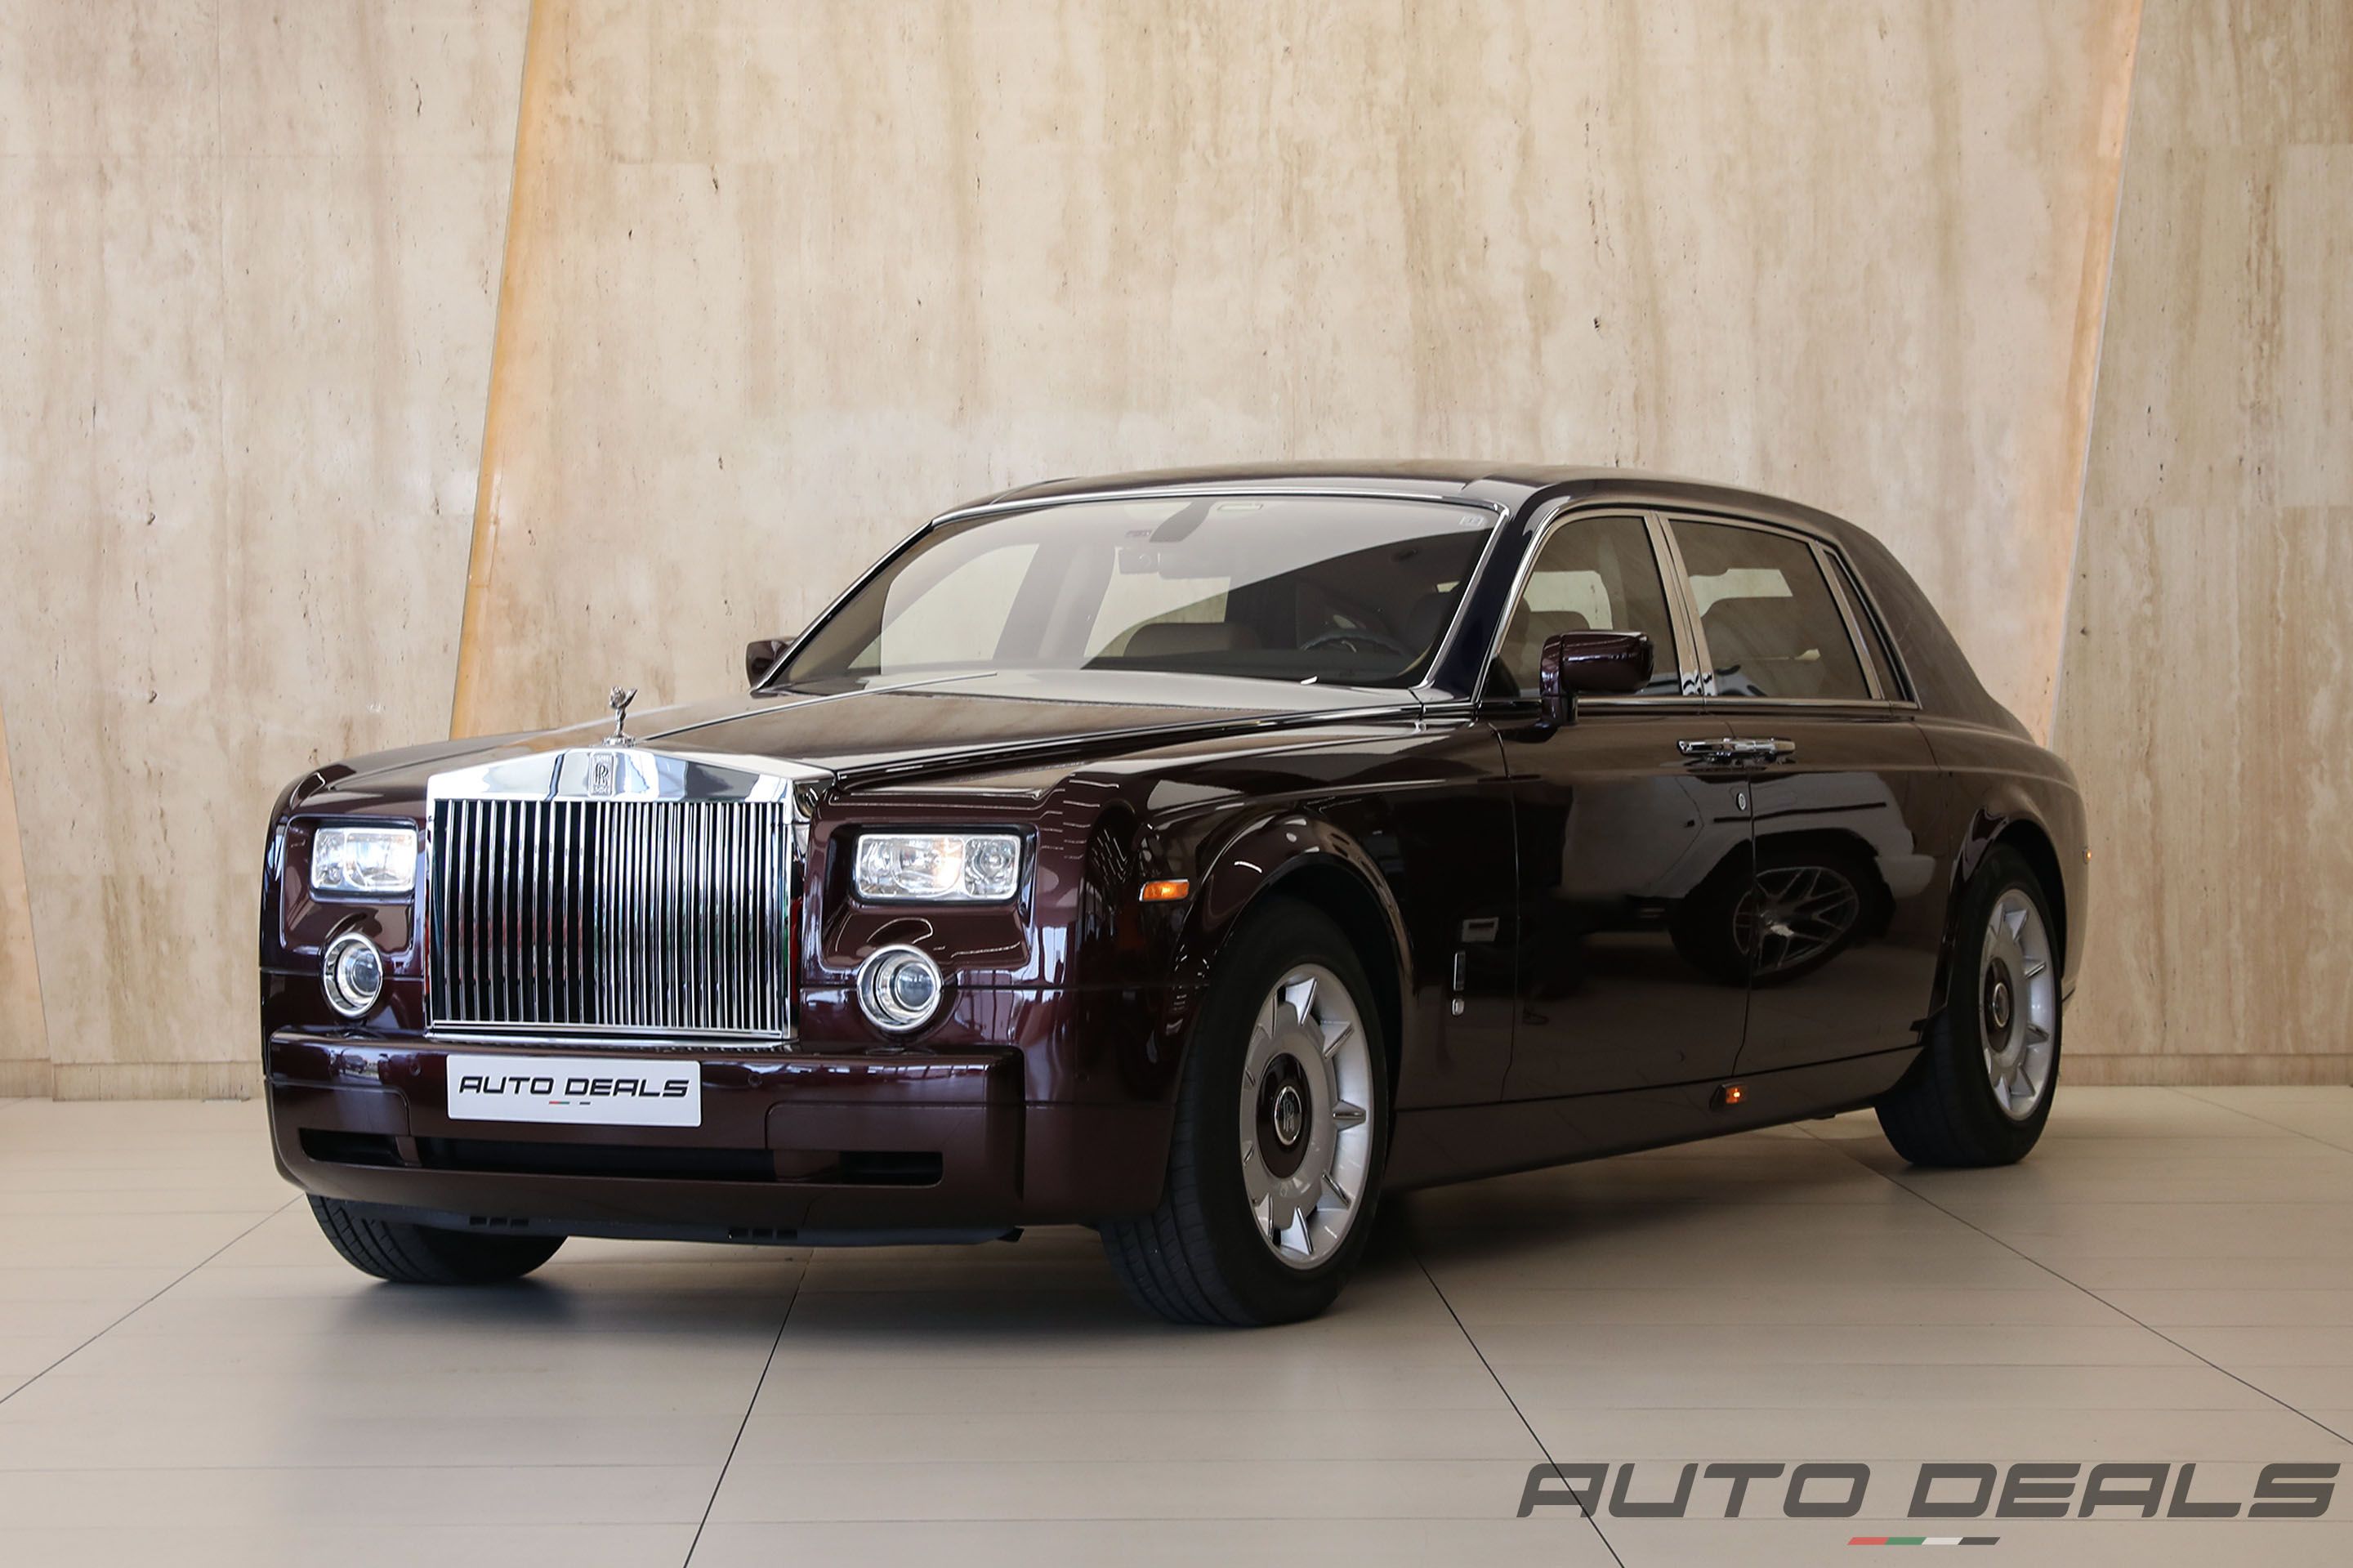 Rolls Royce Phantom | 2006 - Low Mileage - Top Tier Luxurious Sedan - Excellent Condition | 6.8L V12